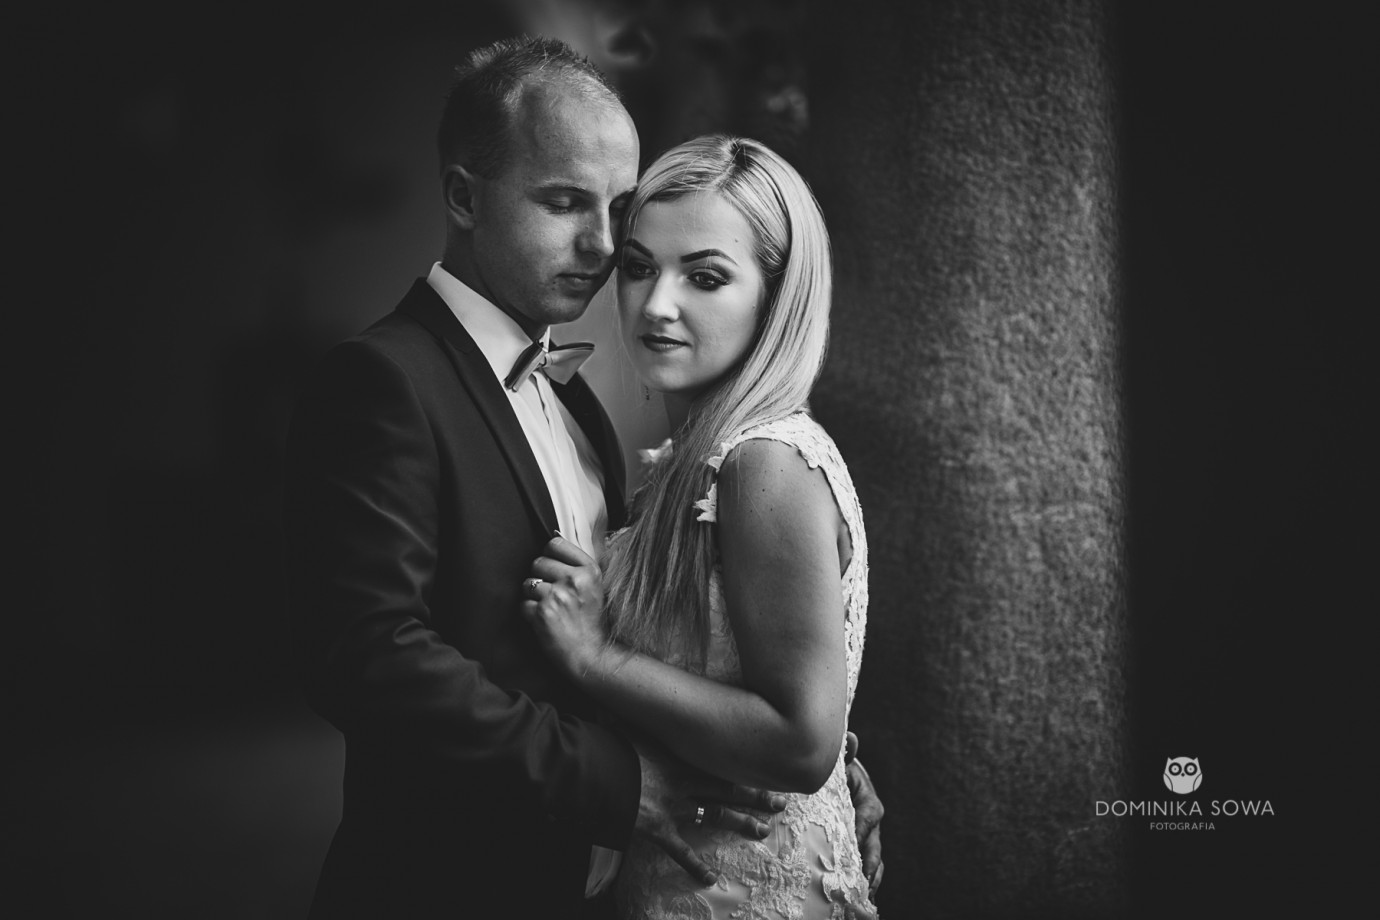 fotograf krakow dominika-sowa-fotografia portfolio zdjecia slubne inspiracje wesele plener slubny sesja slubna